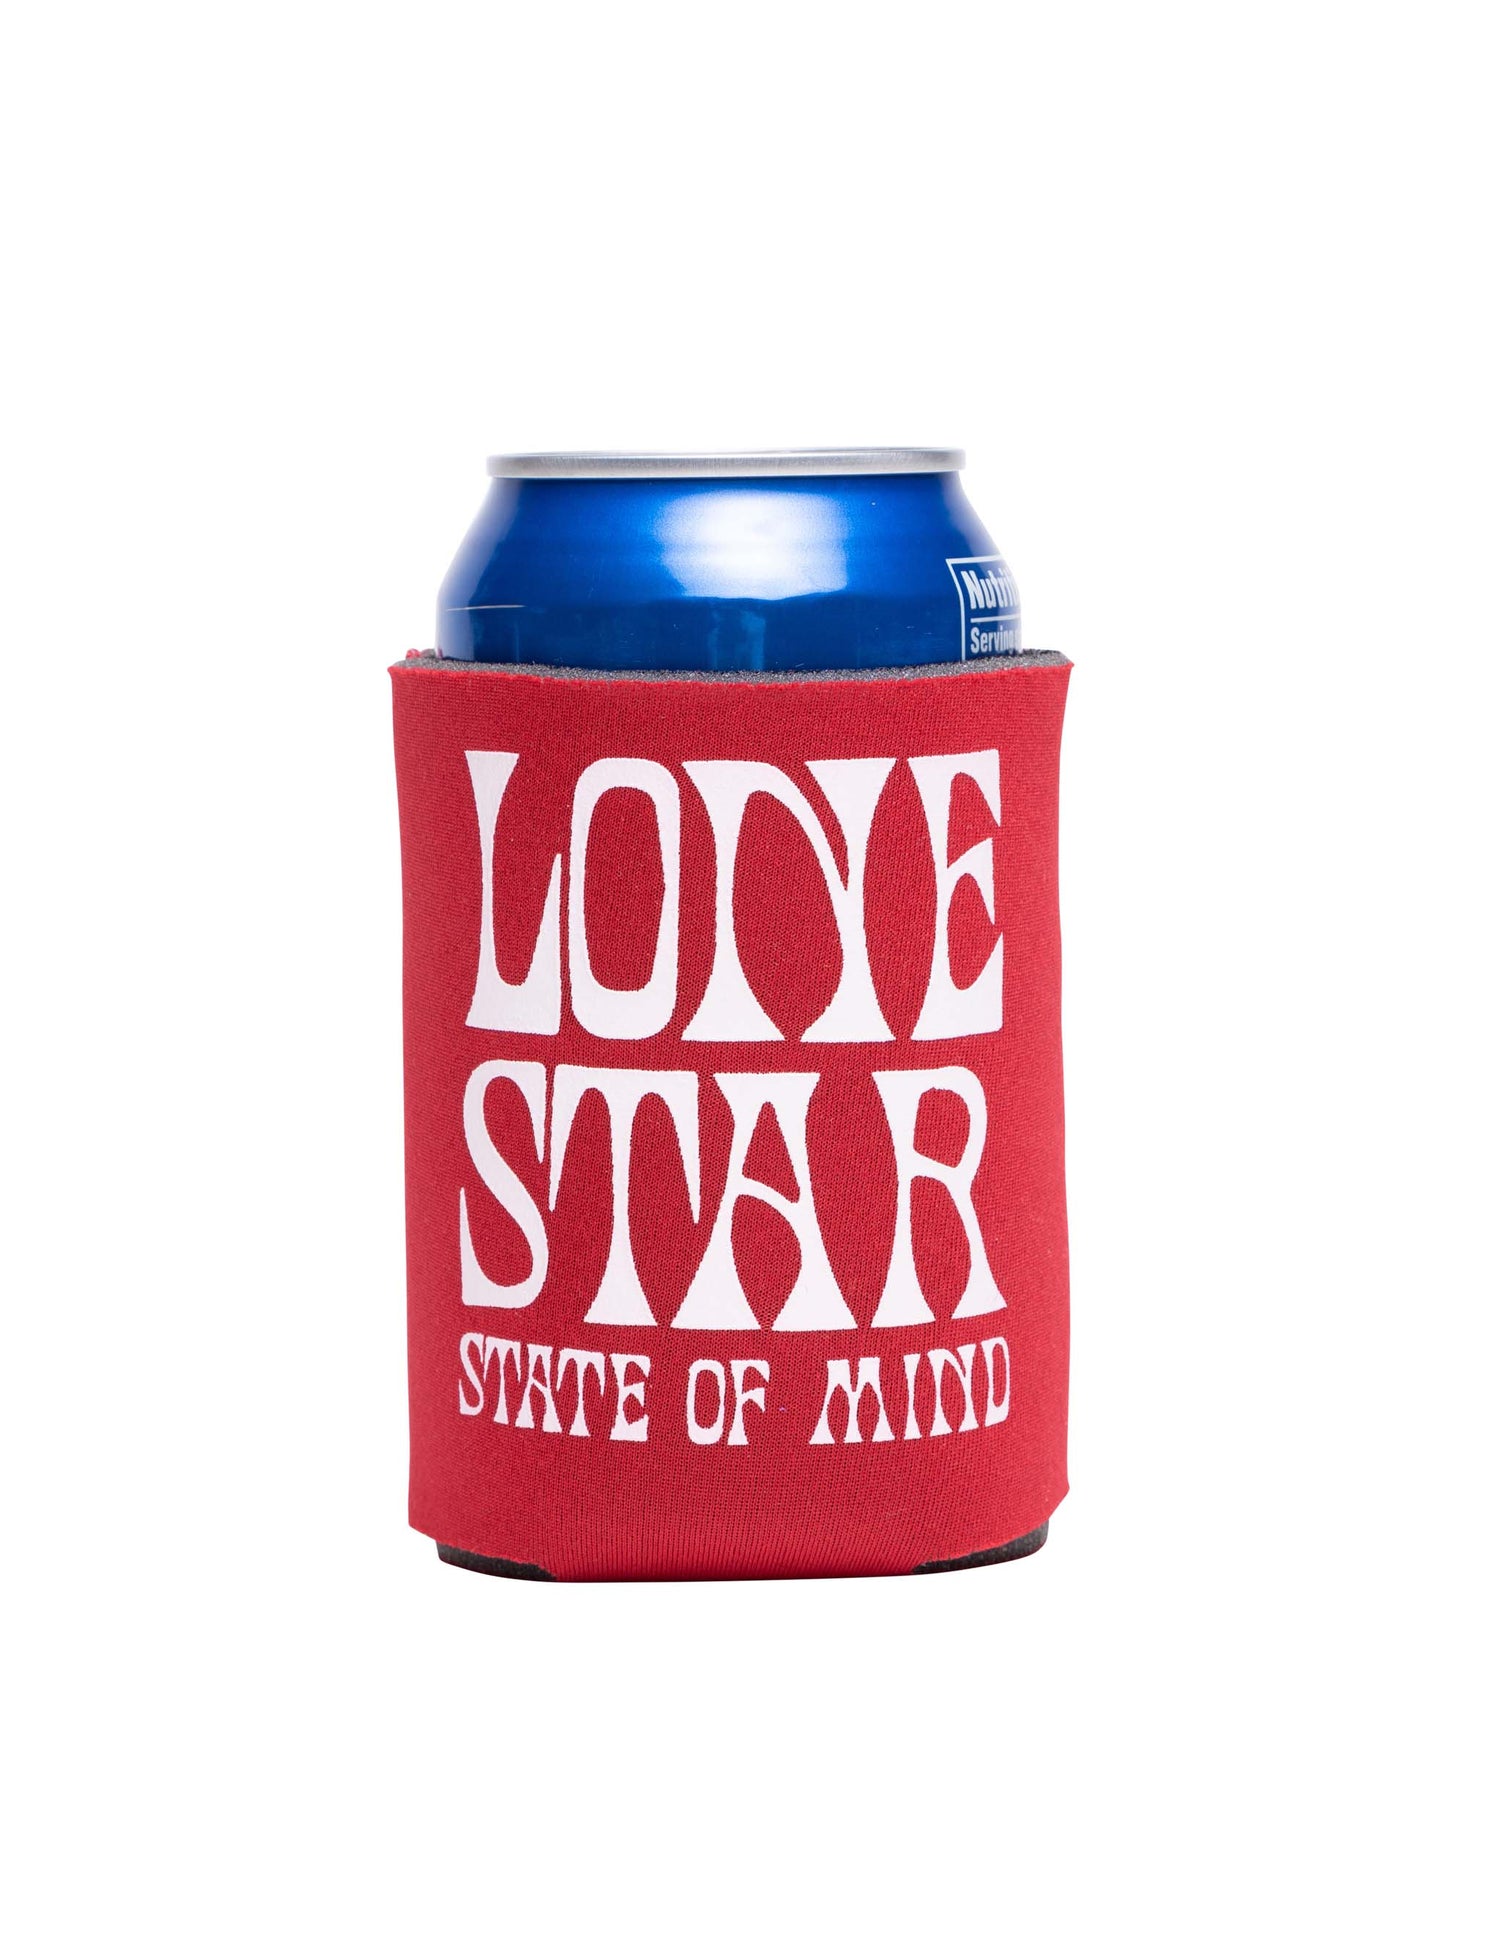 Texas Lone Star State of Mind Koozie